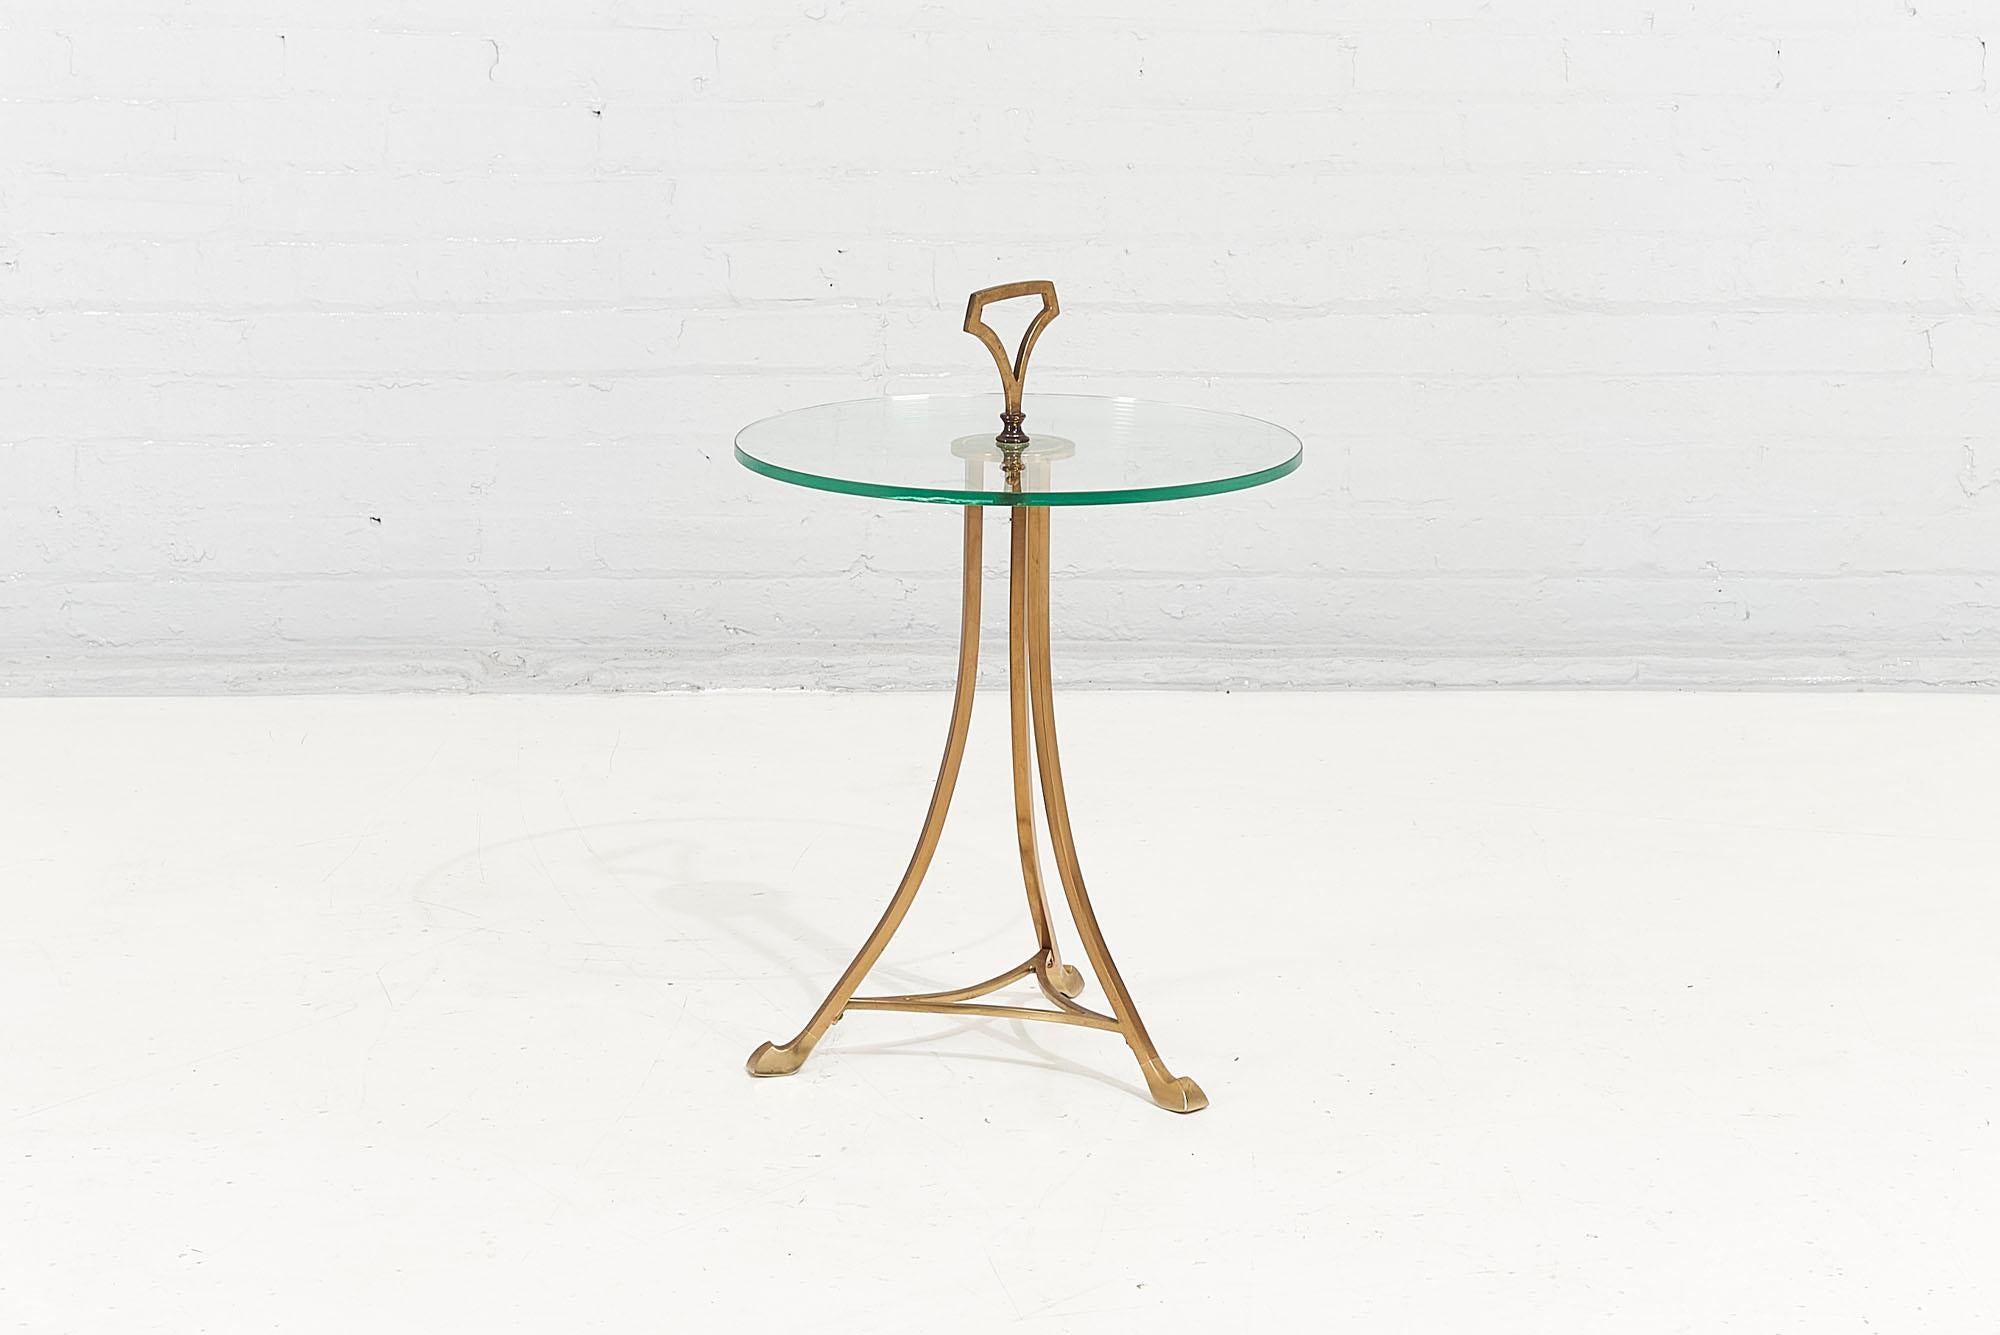 Maison Jansen brass guéridon drink/side table, 1970.